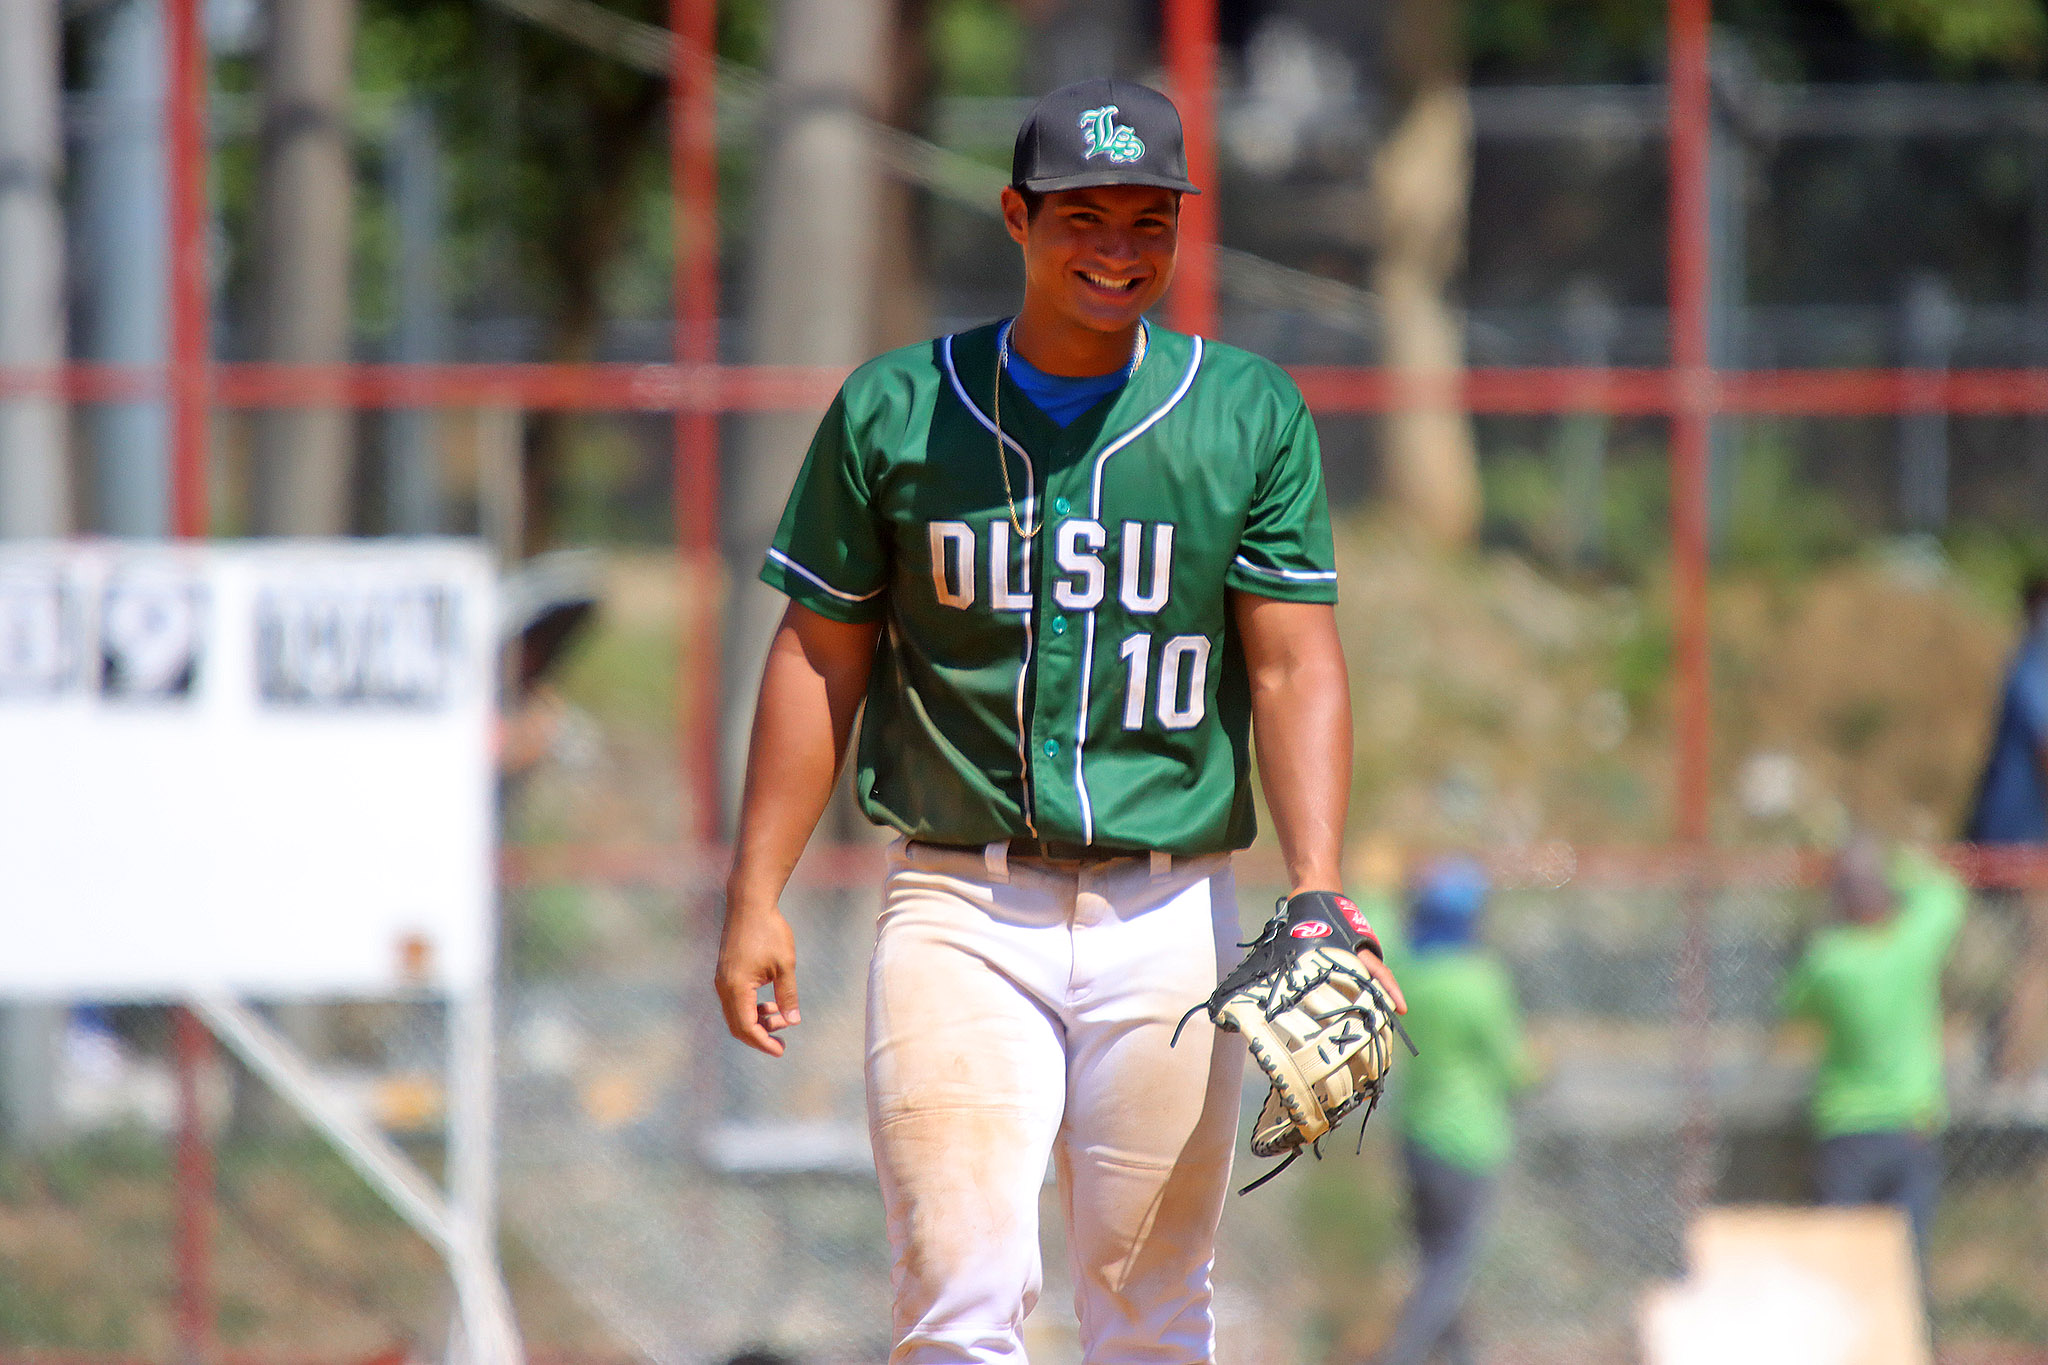 Filipino baseball player Iggy Escaño representing the DLSU Green Batters